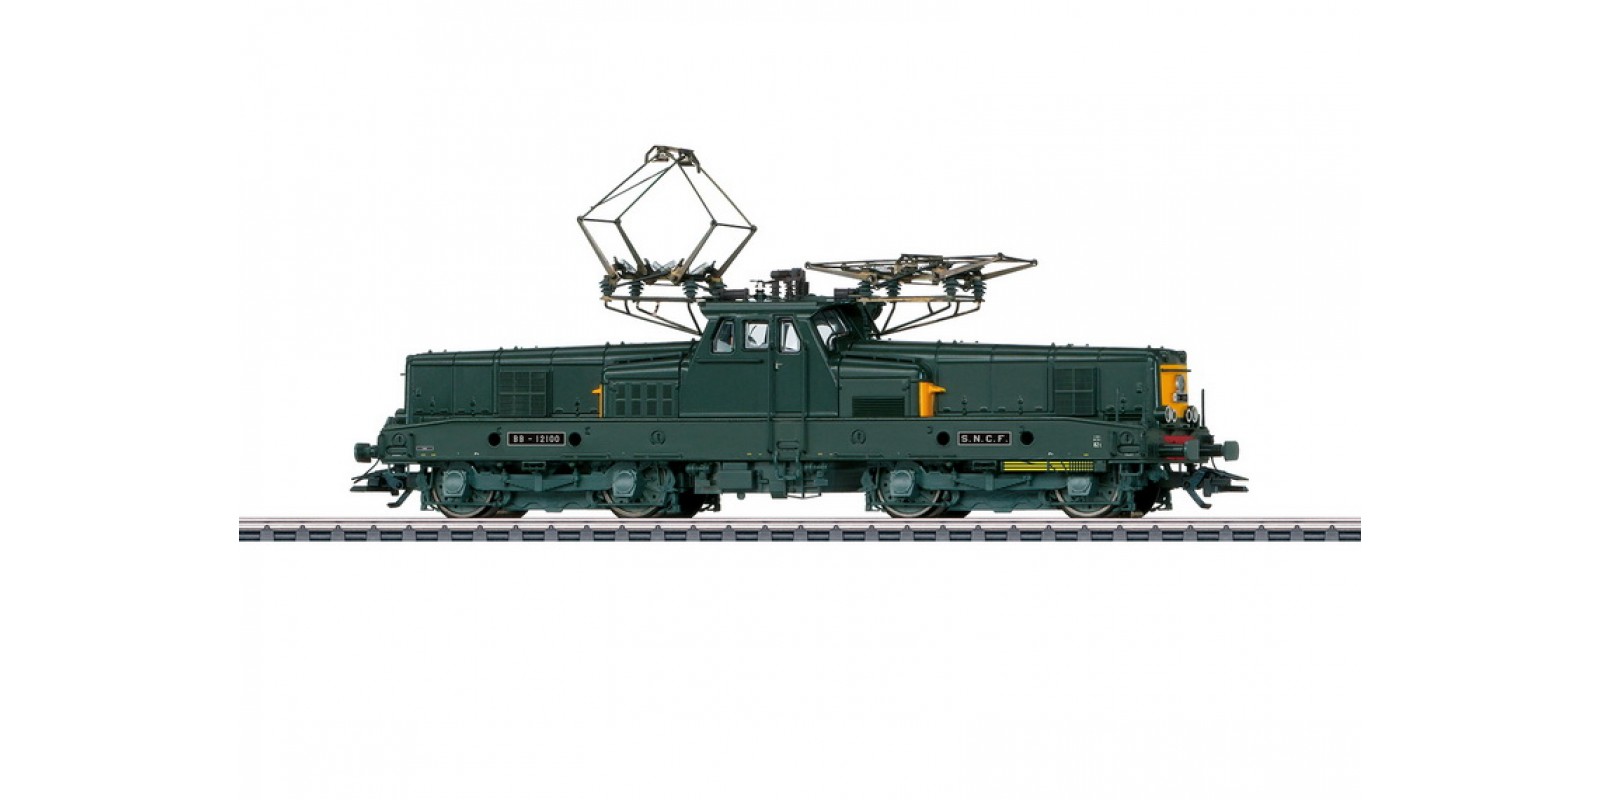 37339 Class BB 12000 "Bügeleisen" / "Flat Iron" Electric Locomotive